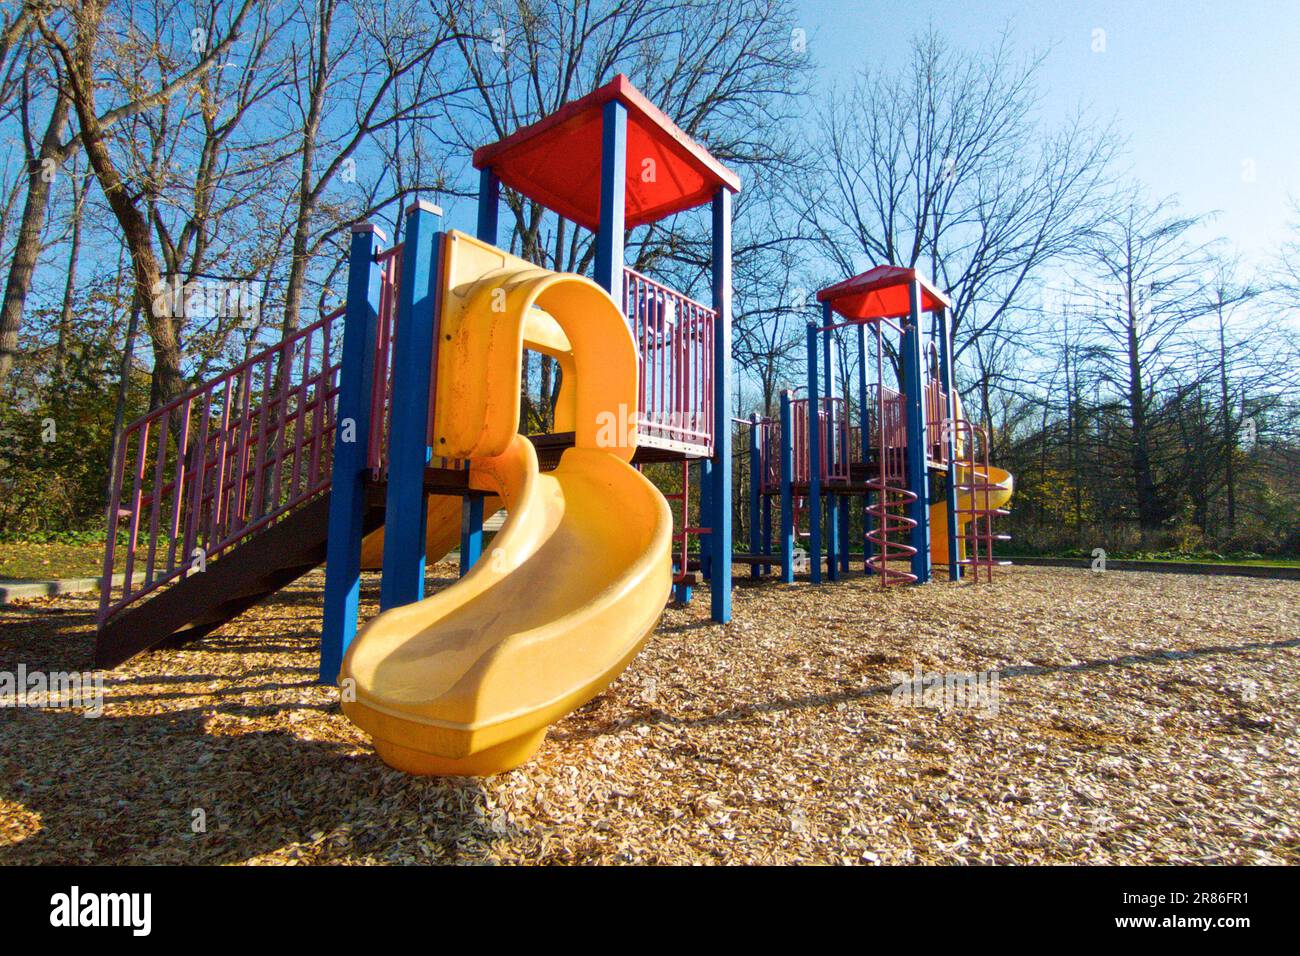 Slide-play equipment in the playground. Stock Photo